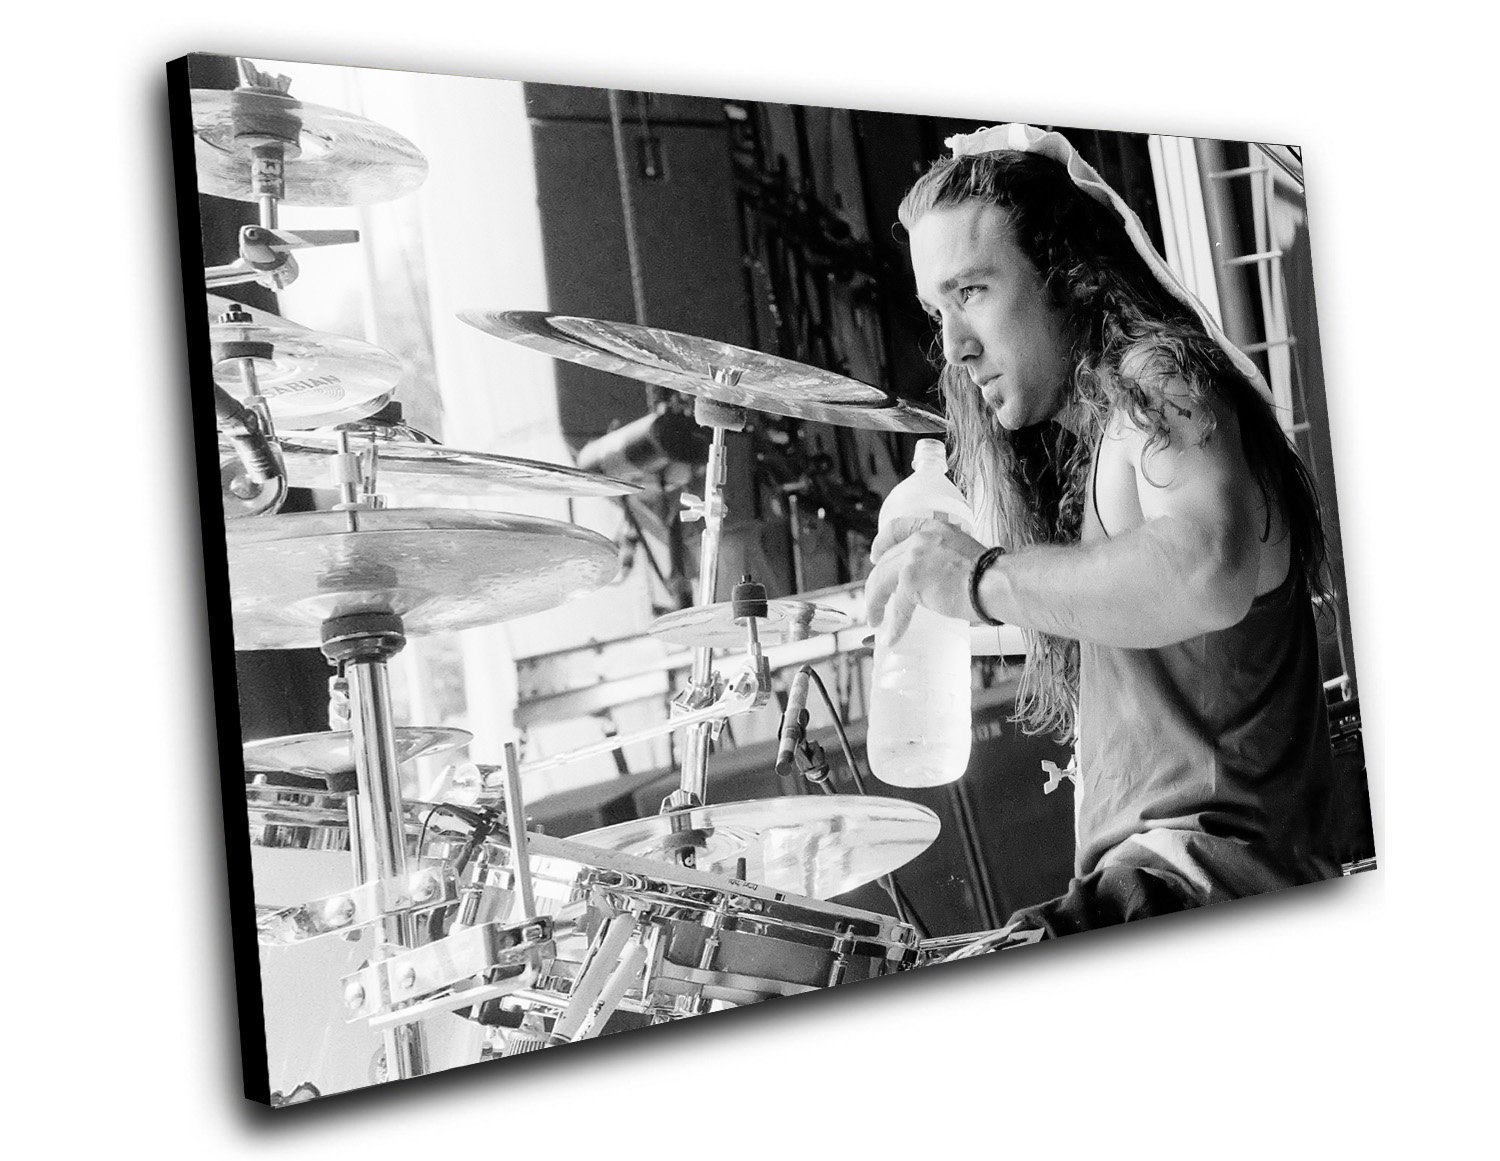 Pearl Jam  8"x12" (20cm/30cm) Canvas Print